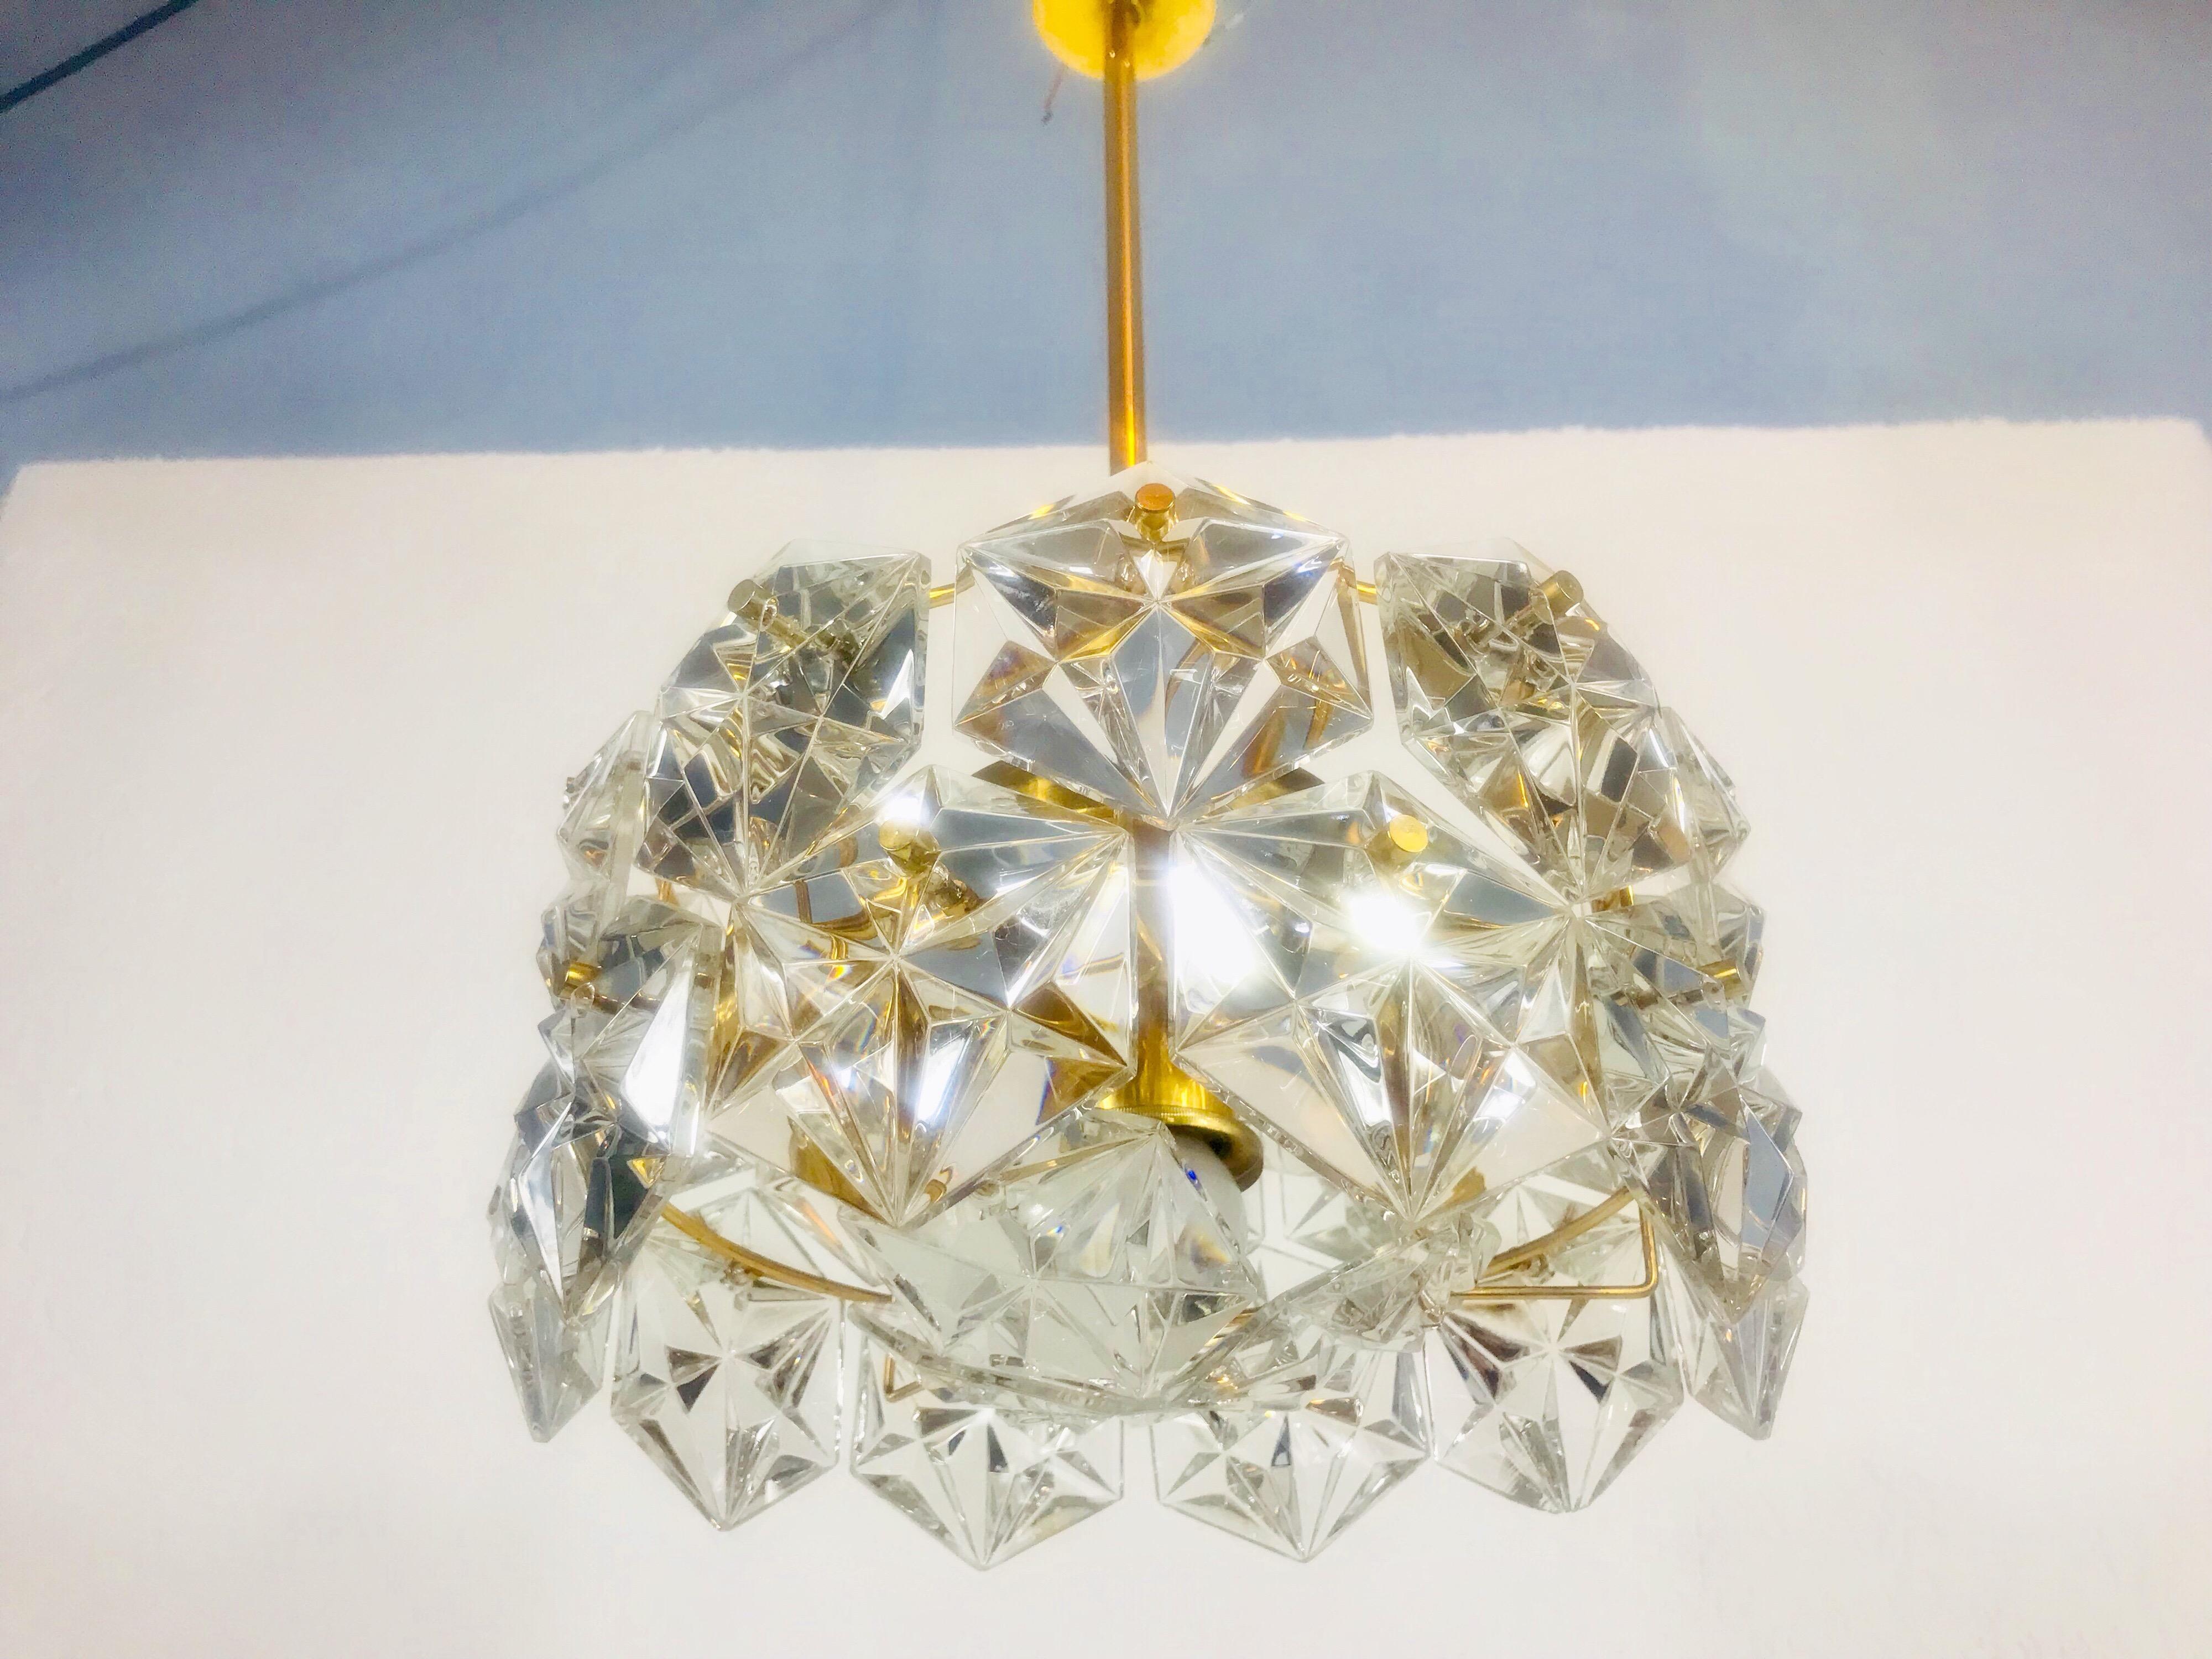 Metal Kinkeldey Midcentury Polished Brass and Crystal Glass Chandelier, circa 1960s For Sale